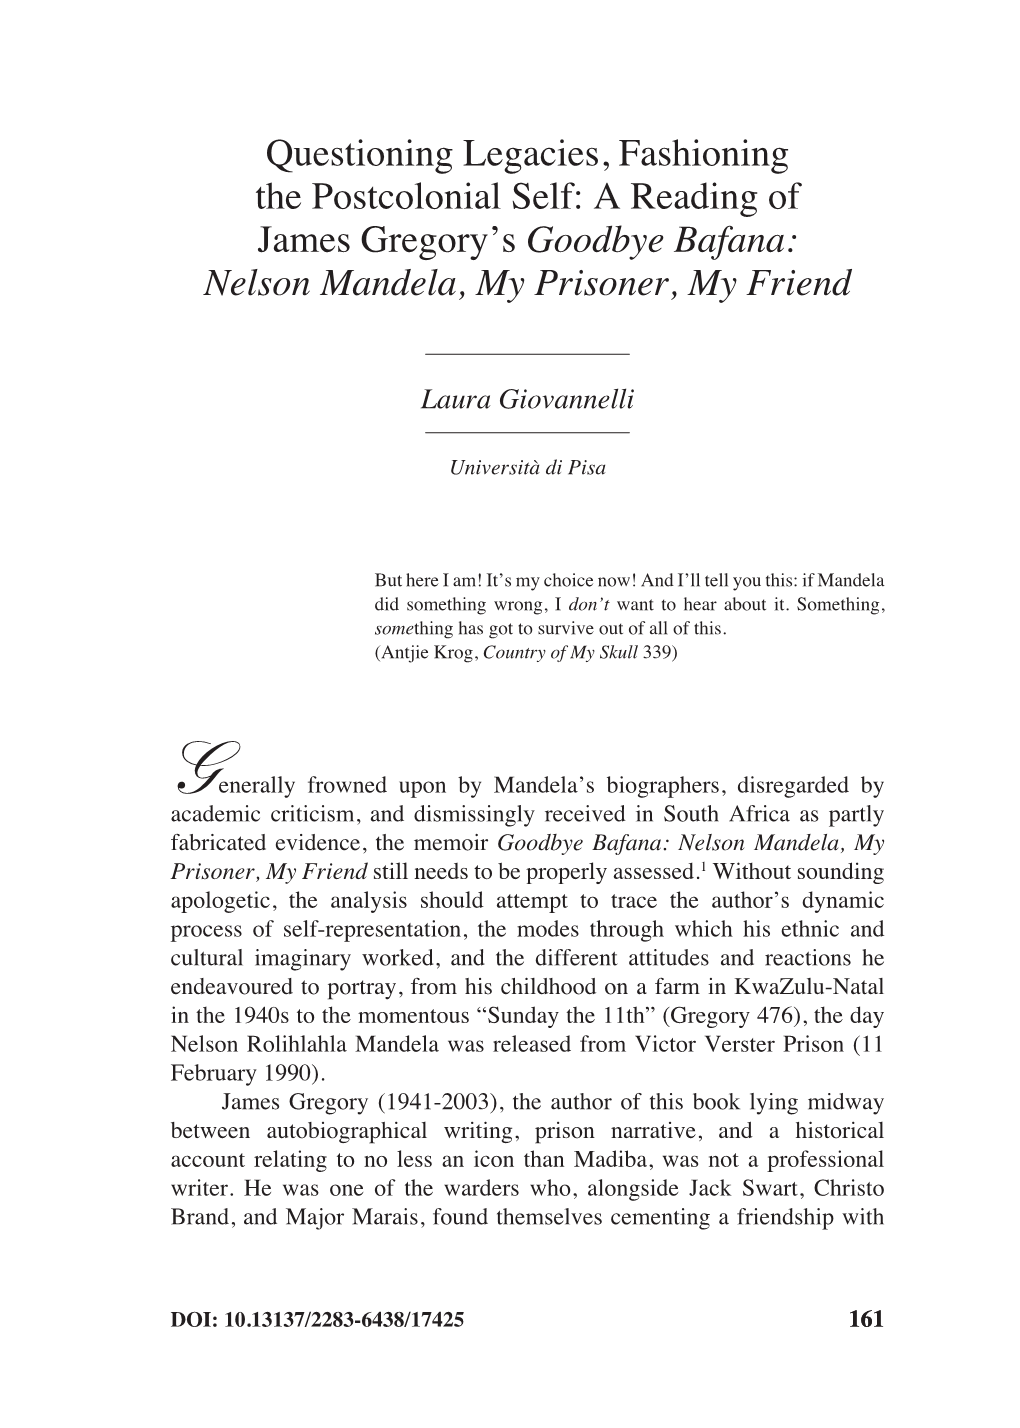 A Reading of James Gregory's Goodbye Bafana